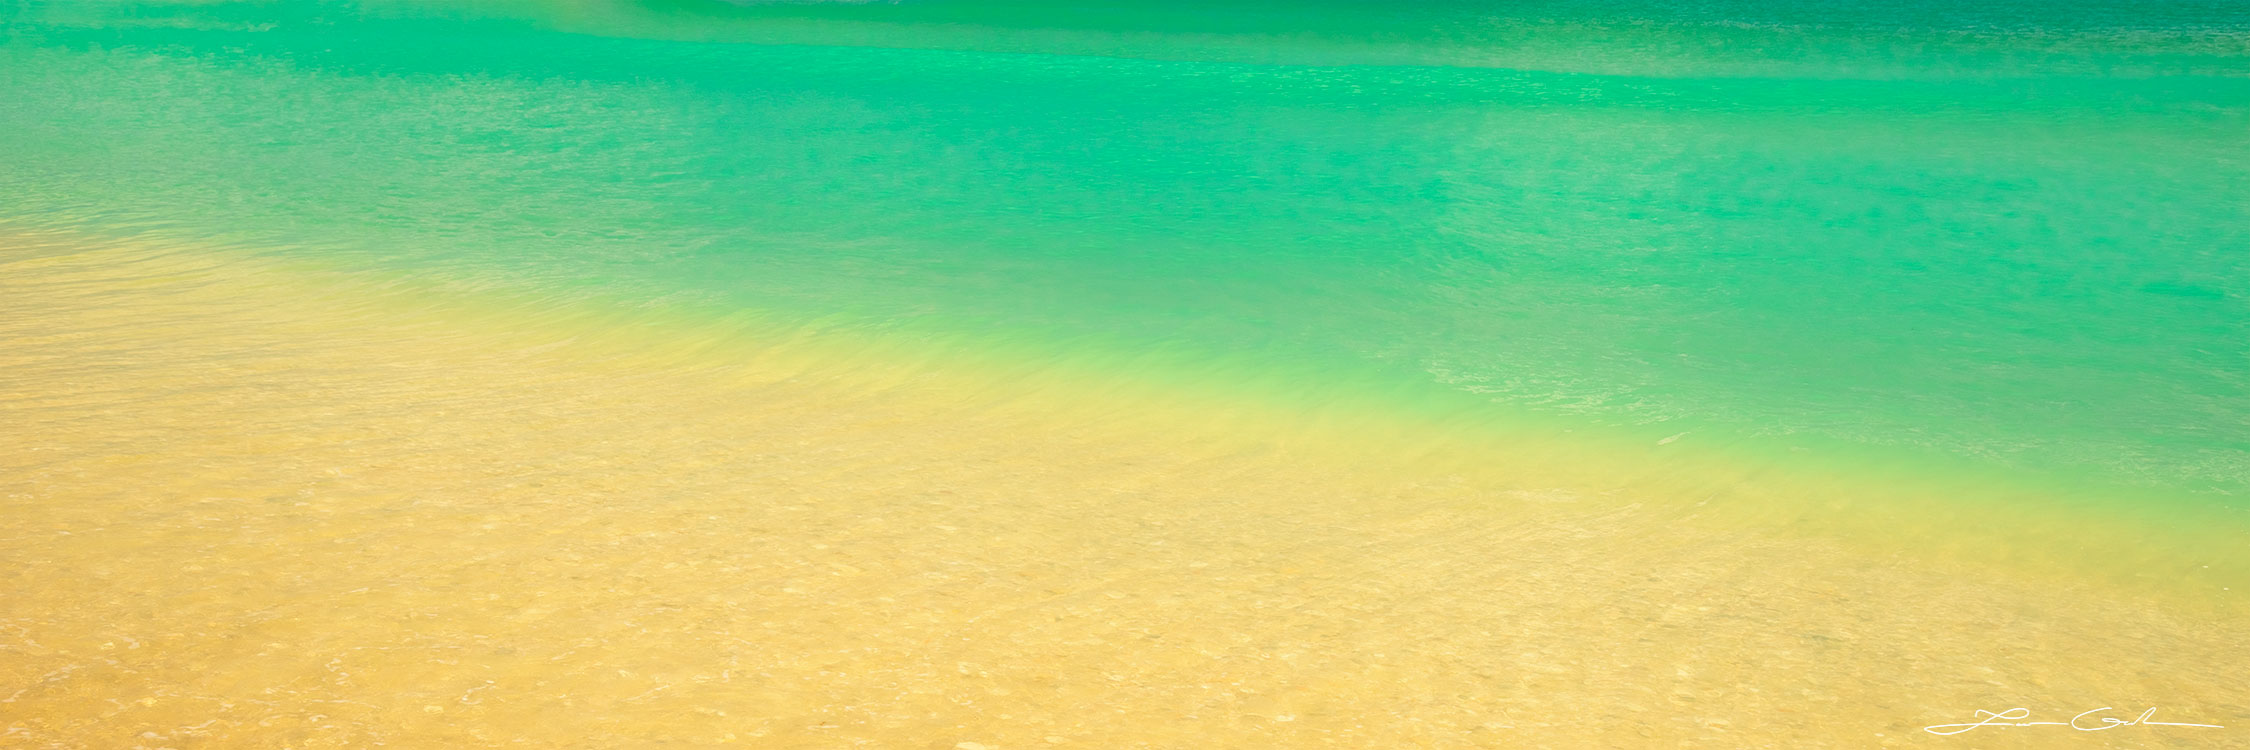 Turquoise water abstract near a shallow ocean beach - Gintchin Fine Art